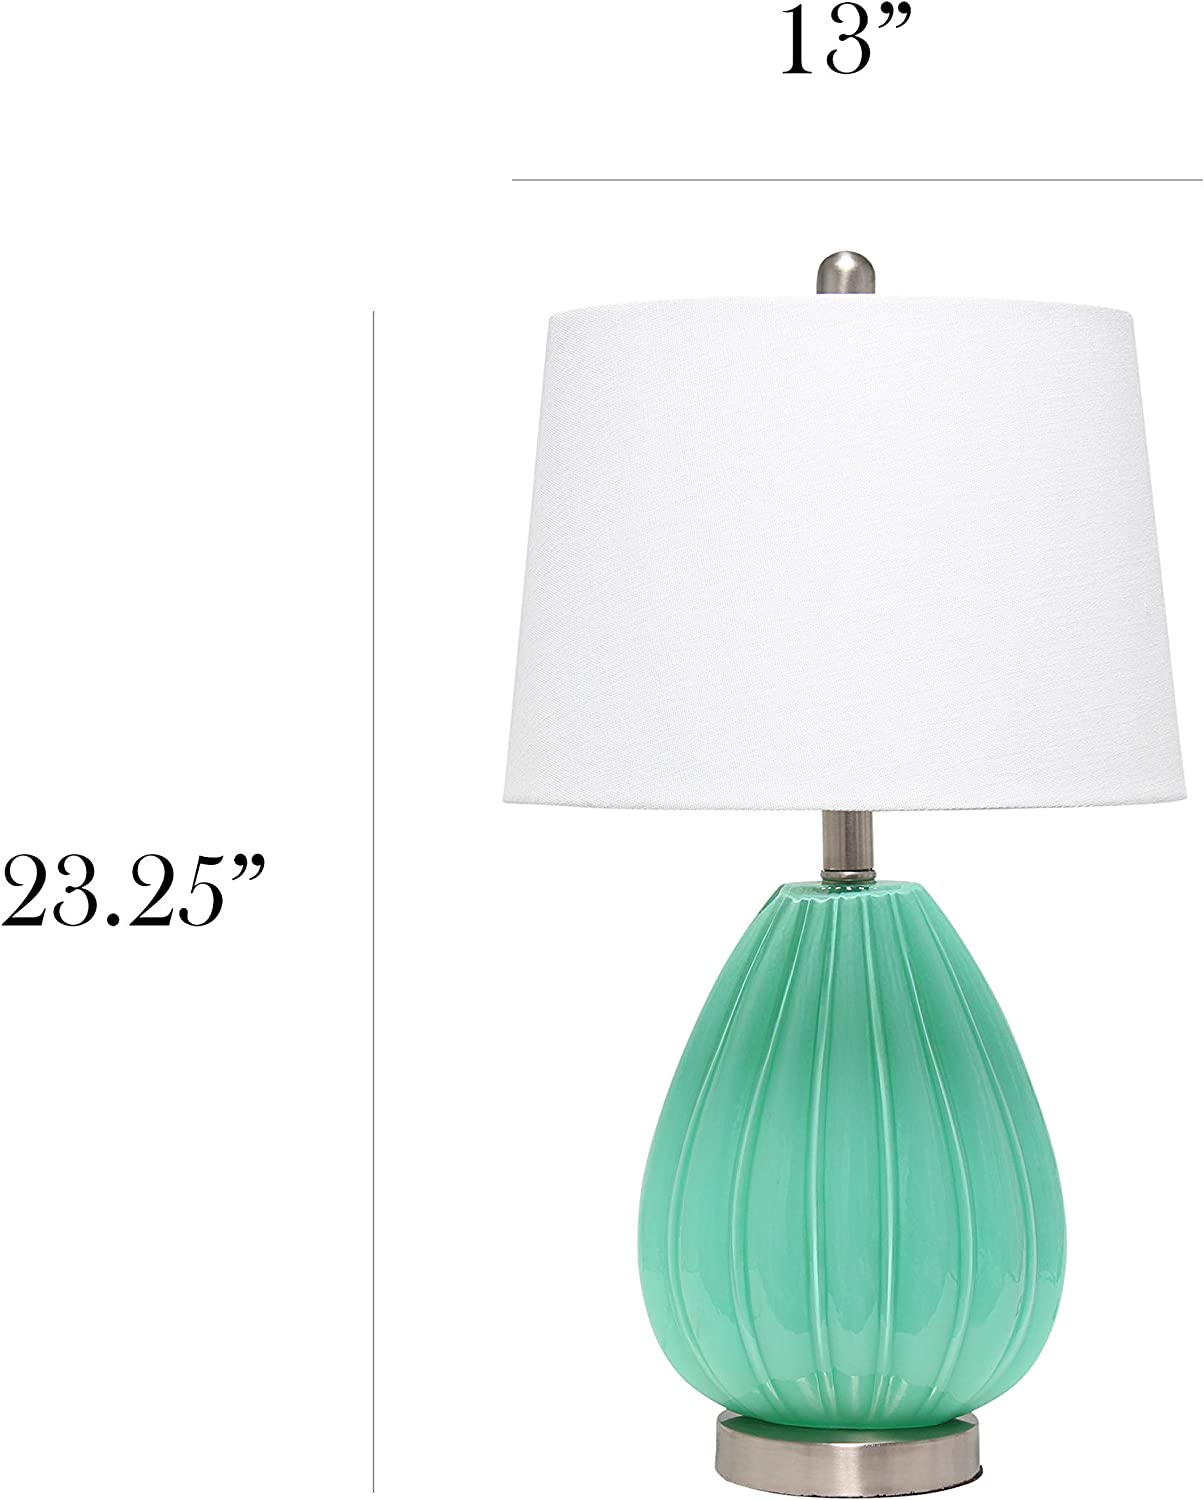 Elegant Designs LT3320-TEL Creased Fabric Shade Table Lamp, Teal/White